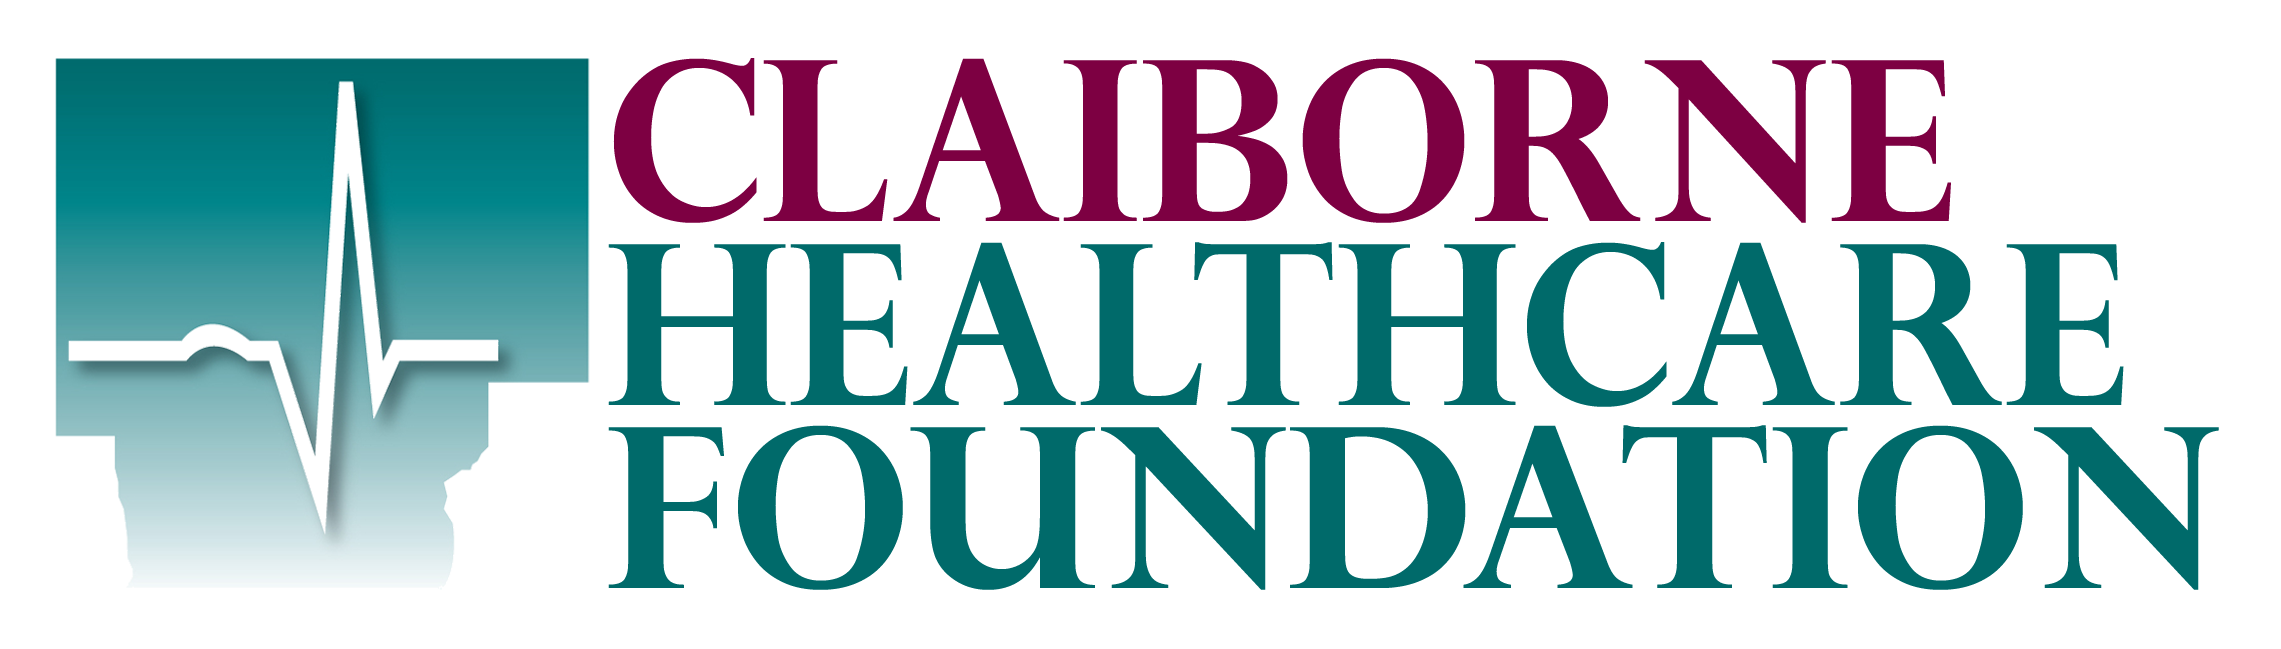 Claiborne Healthcare Foundation